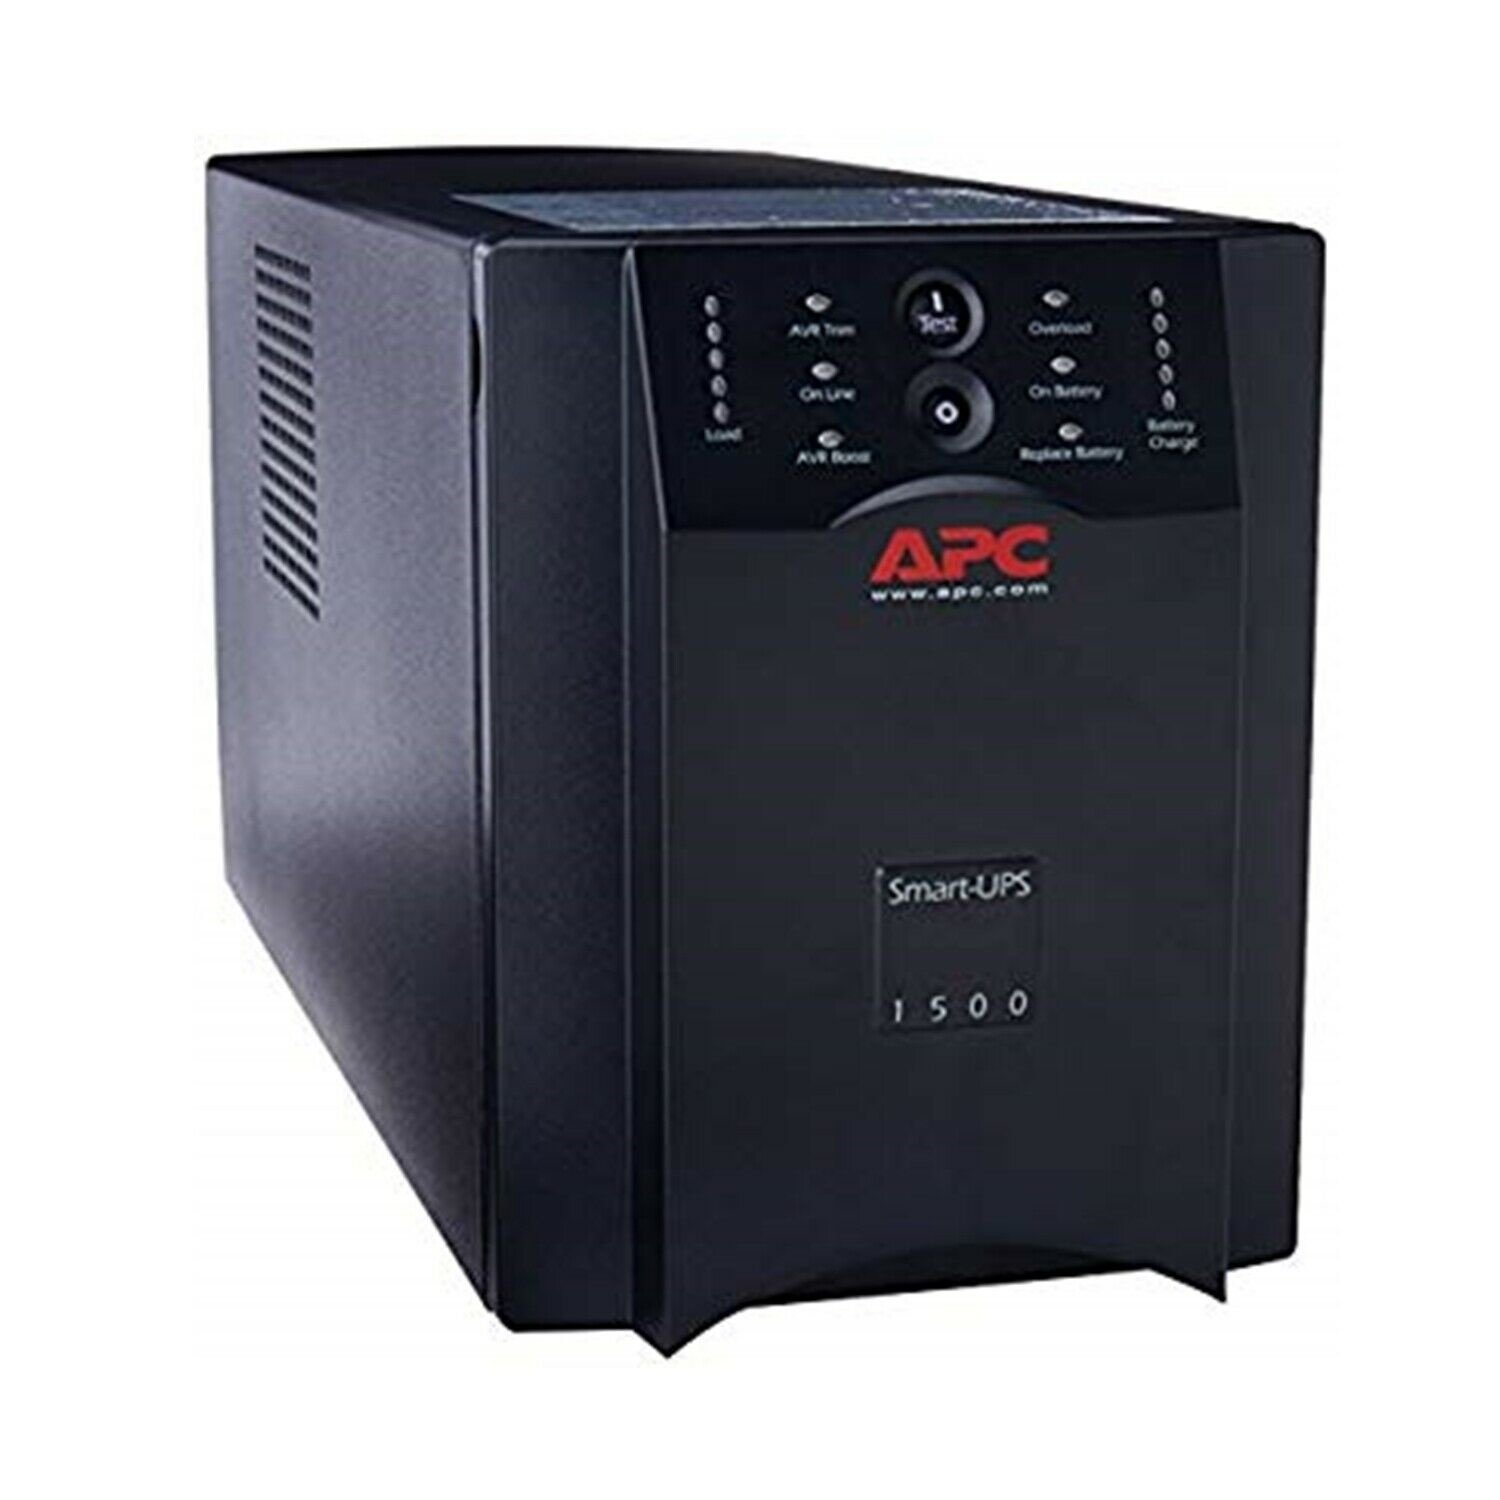 APC Smart UPS SUA1500I 1500VA UPS VGA & USB Power Supply - BuyGreen